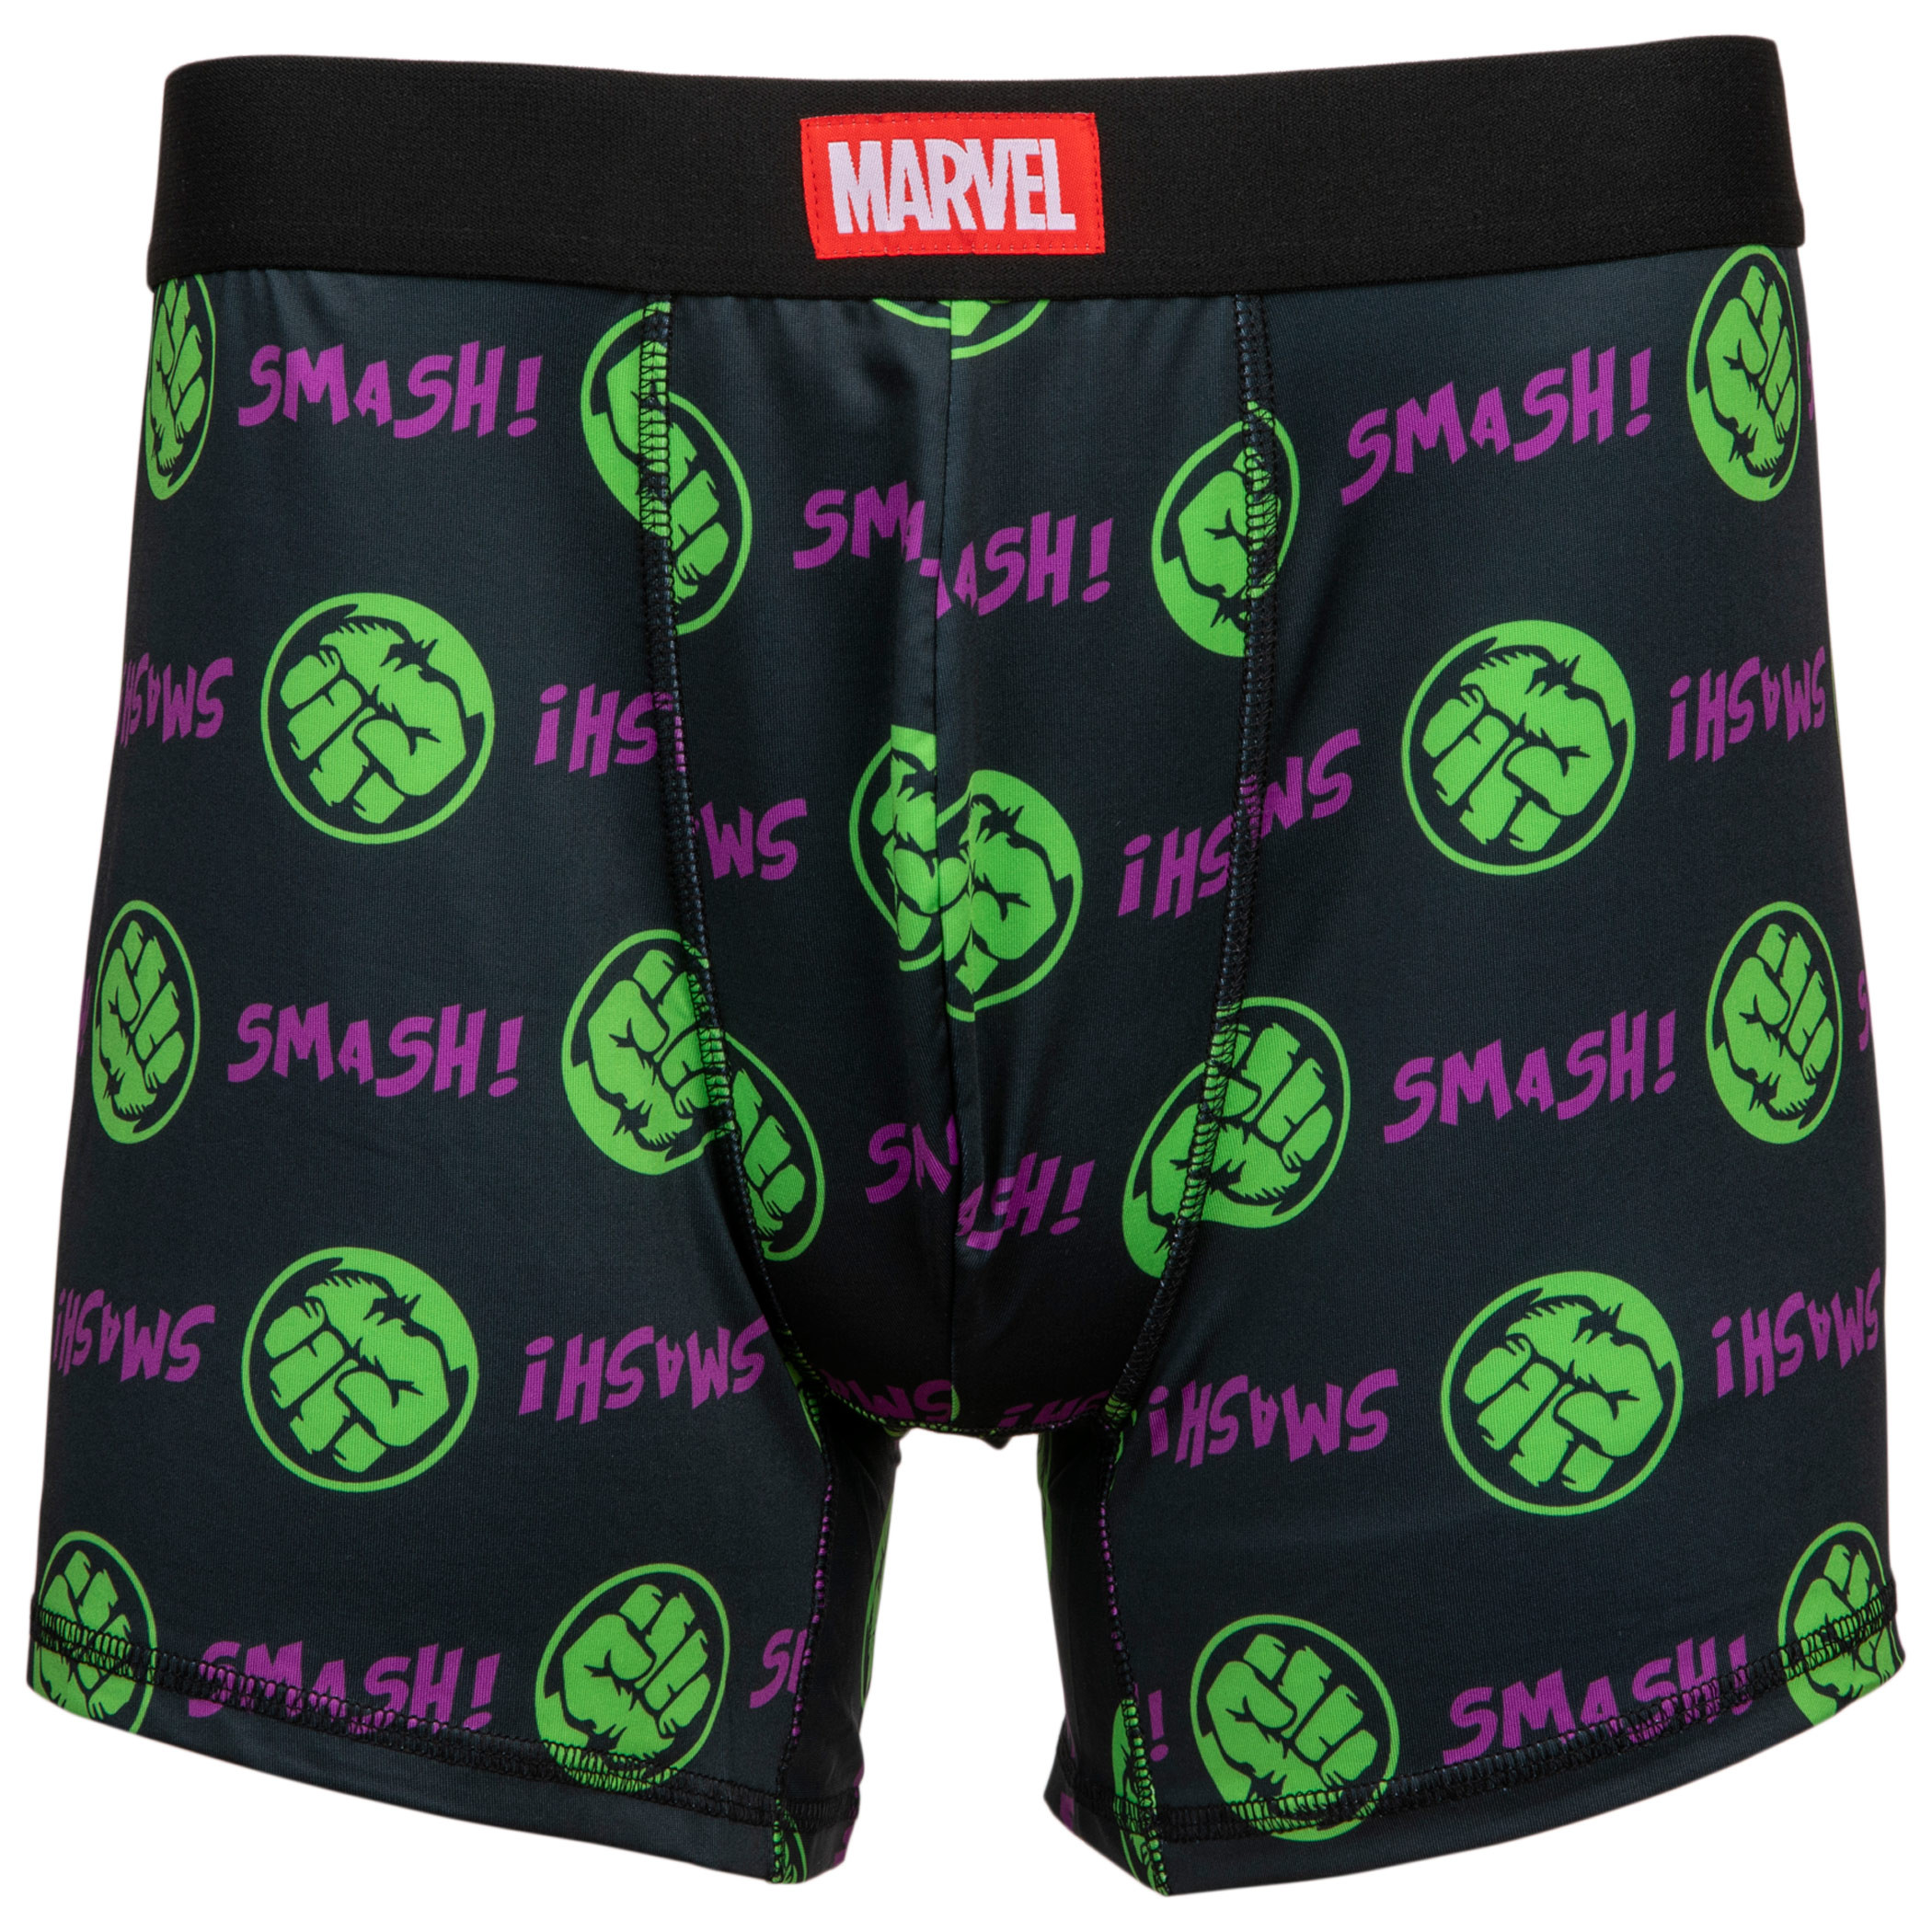 Marvel Avengers The Incredible Hulk Big Boys 1 Pack Boxer Shorts 